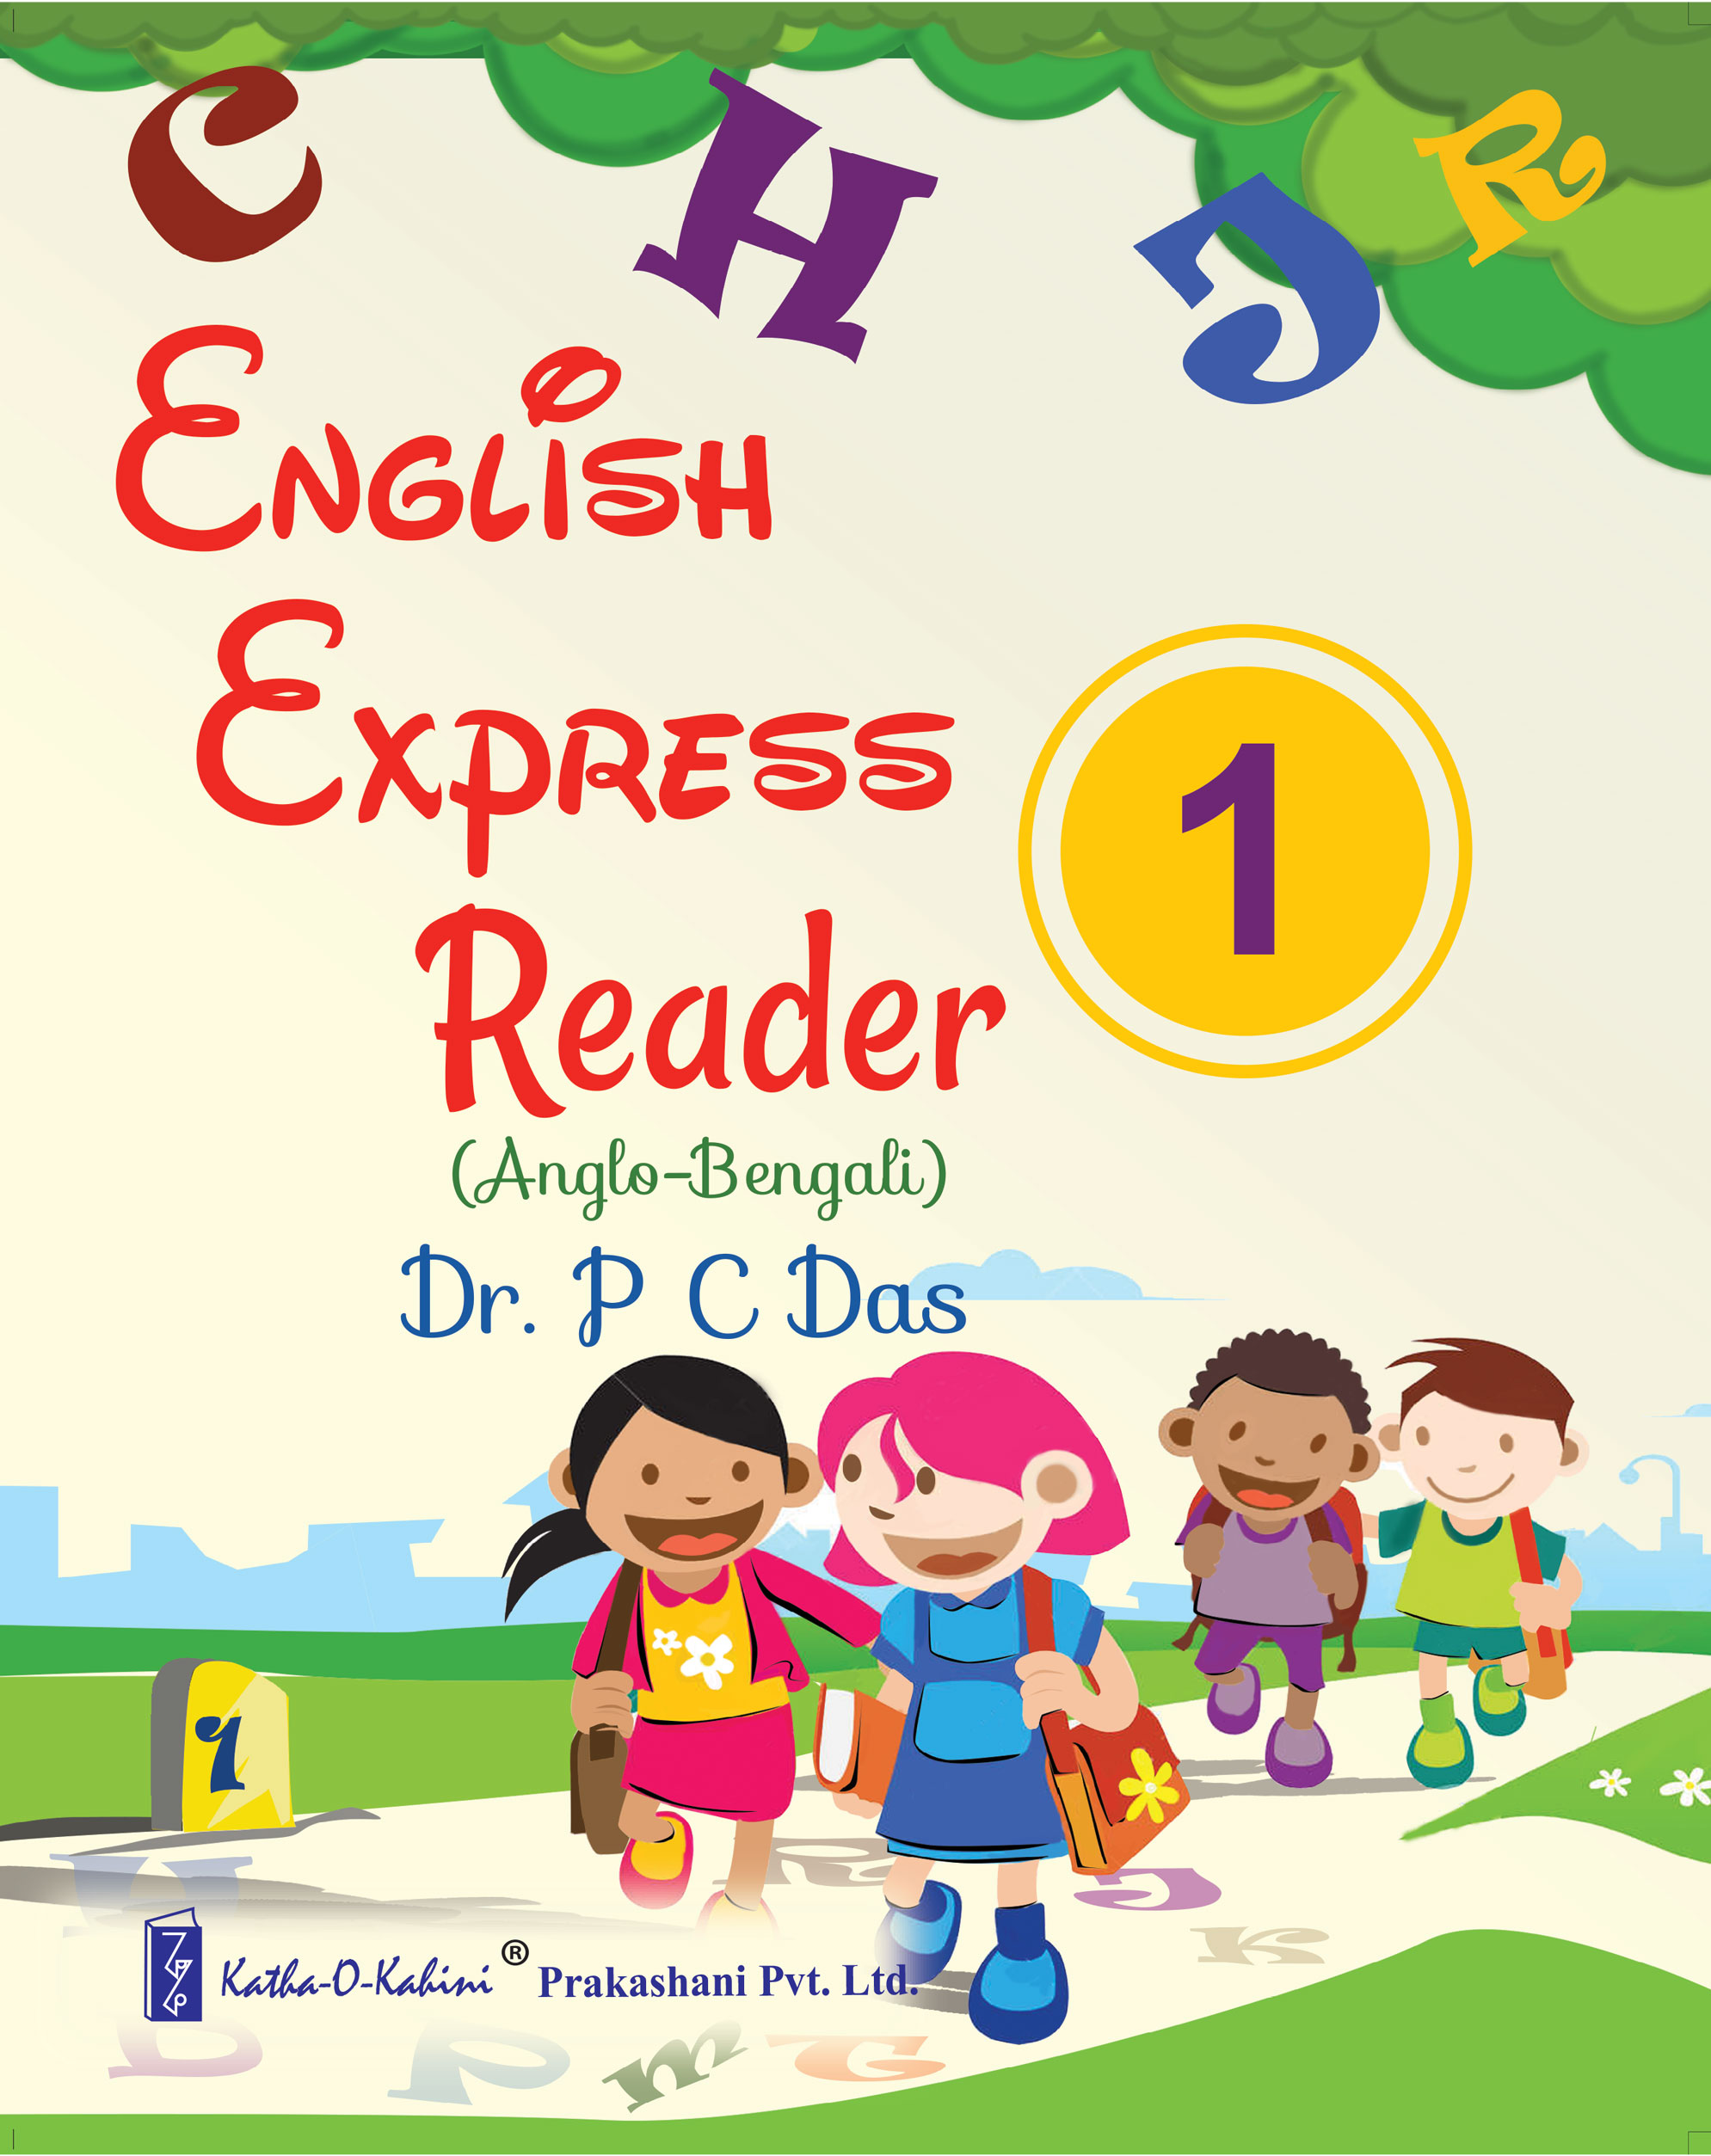 English Express Reader (Anglo-Bengali)_Book 1